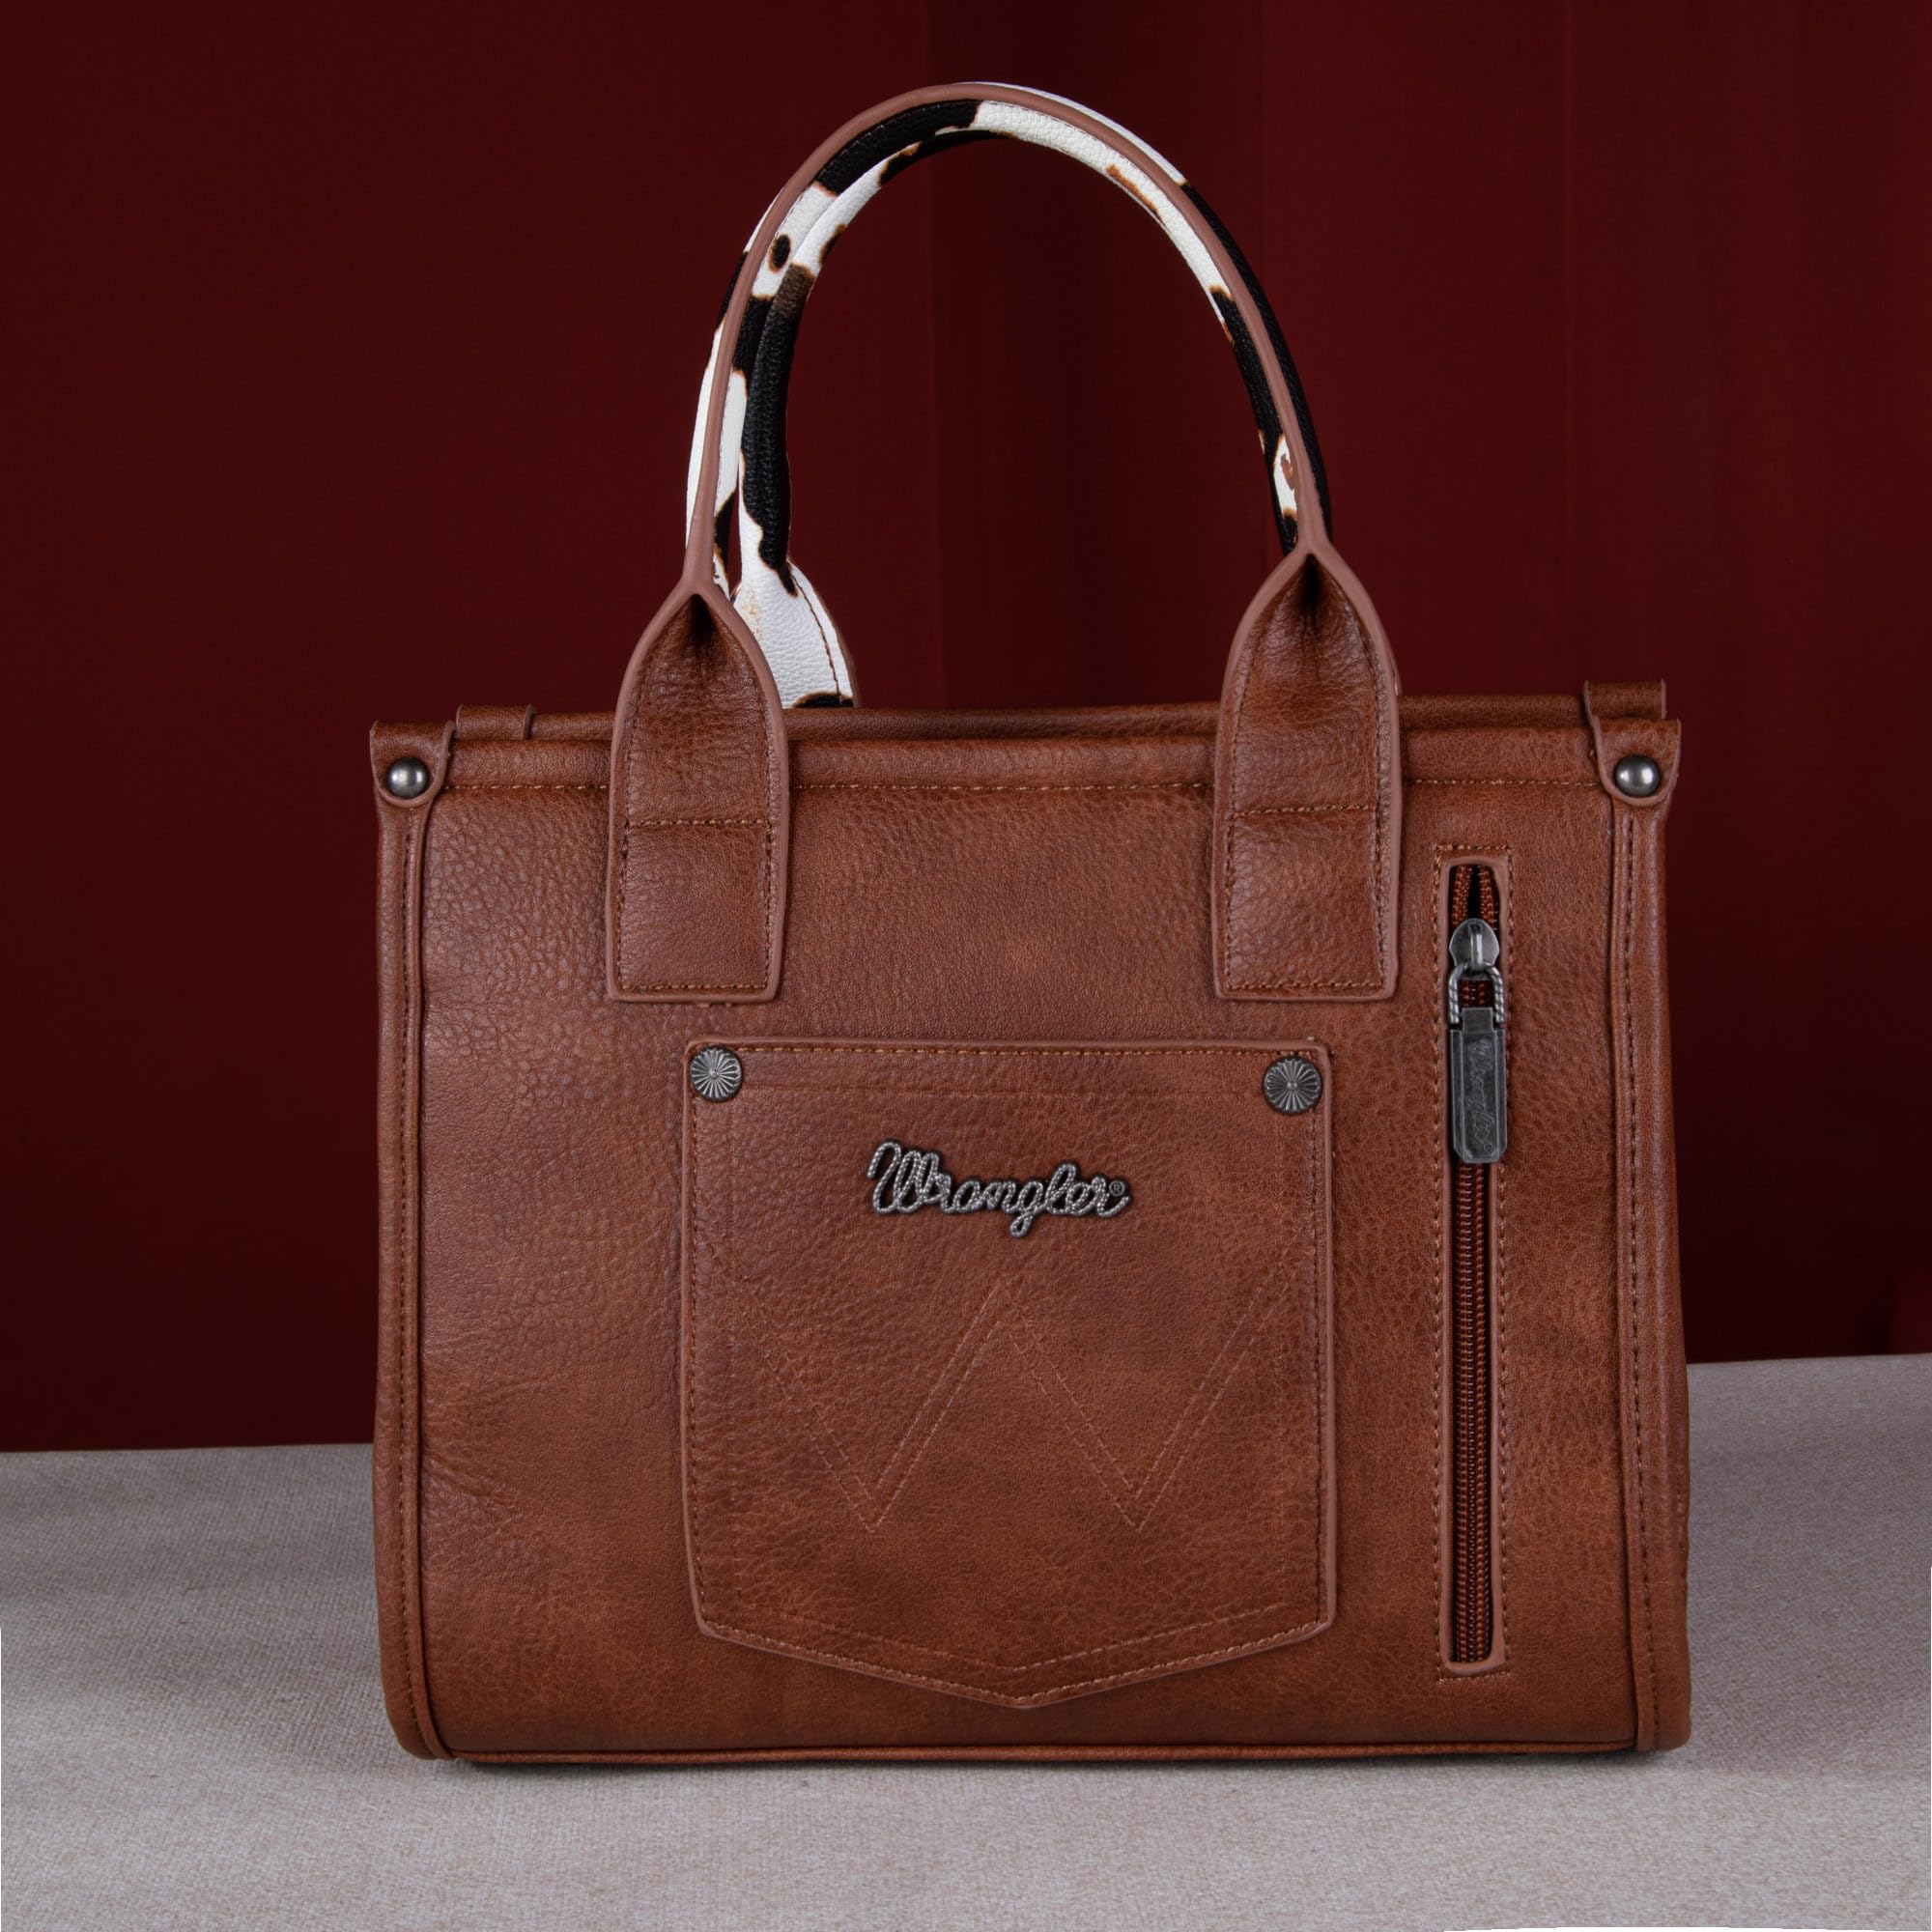 Wrangler Tote Bag for Women Cow Print Purse Top Handle Handbags Vintage Satchel